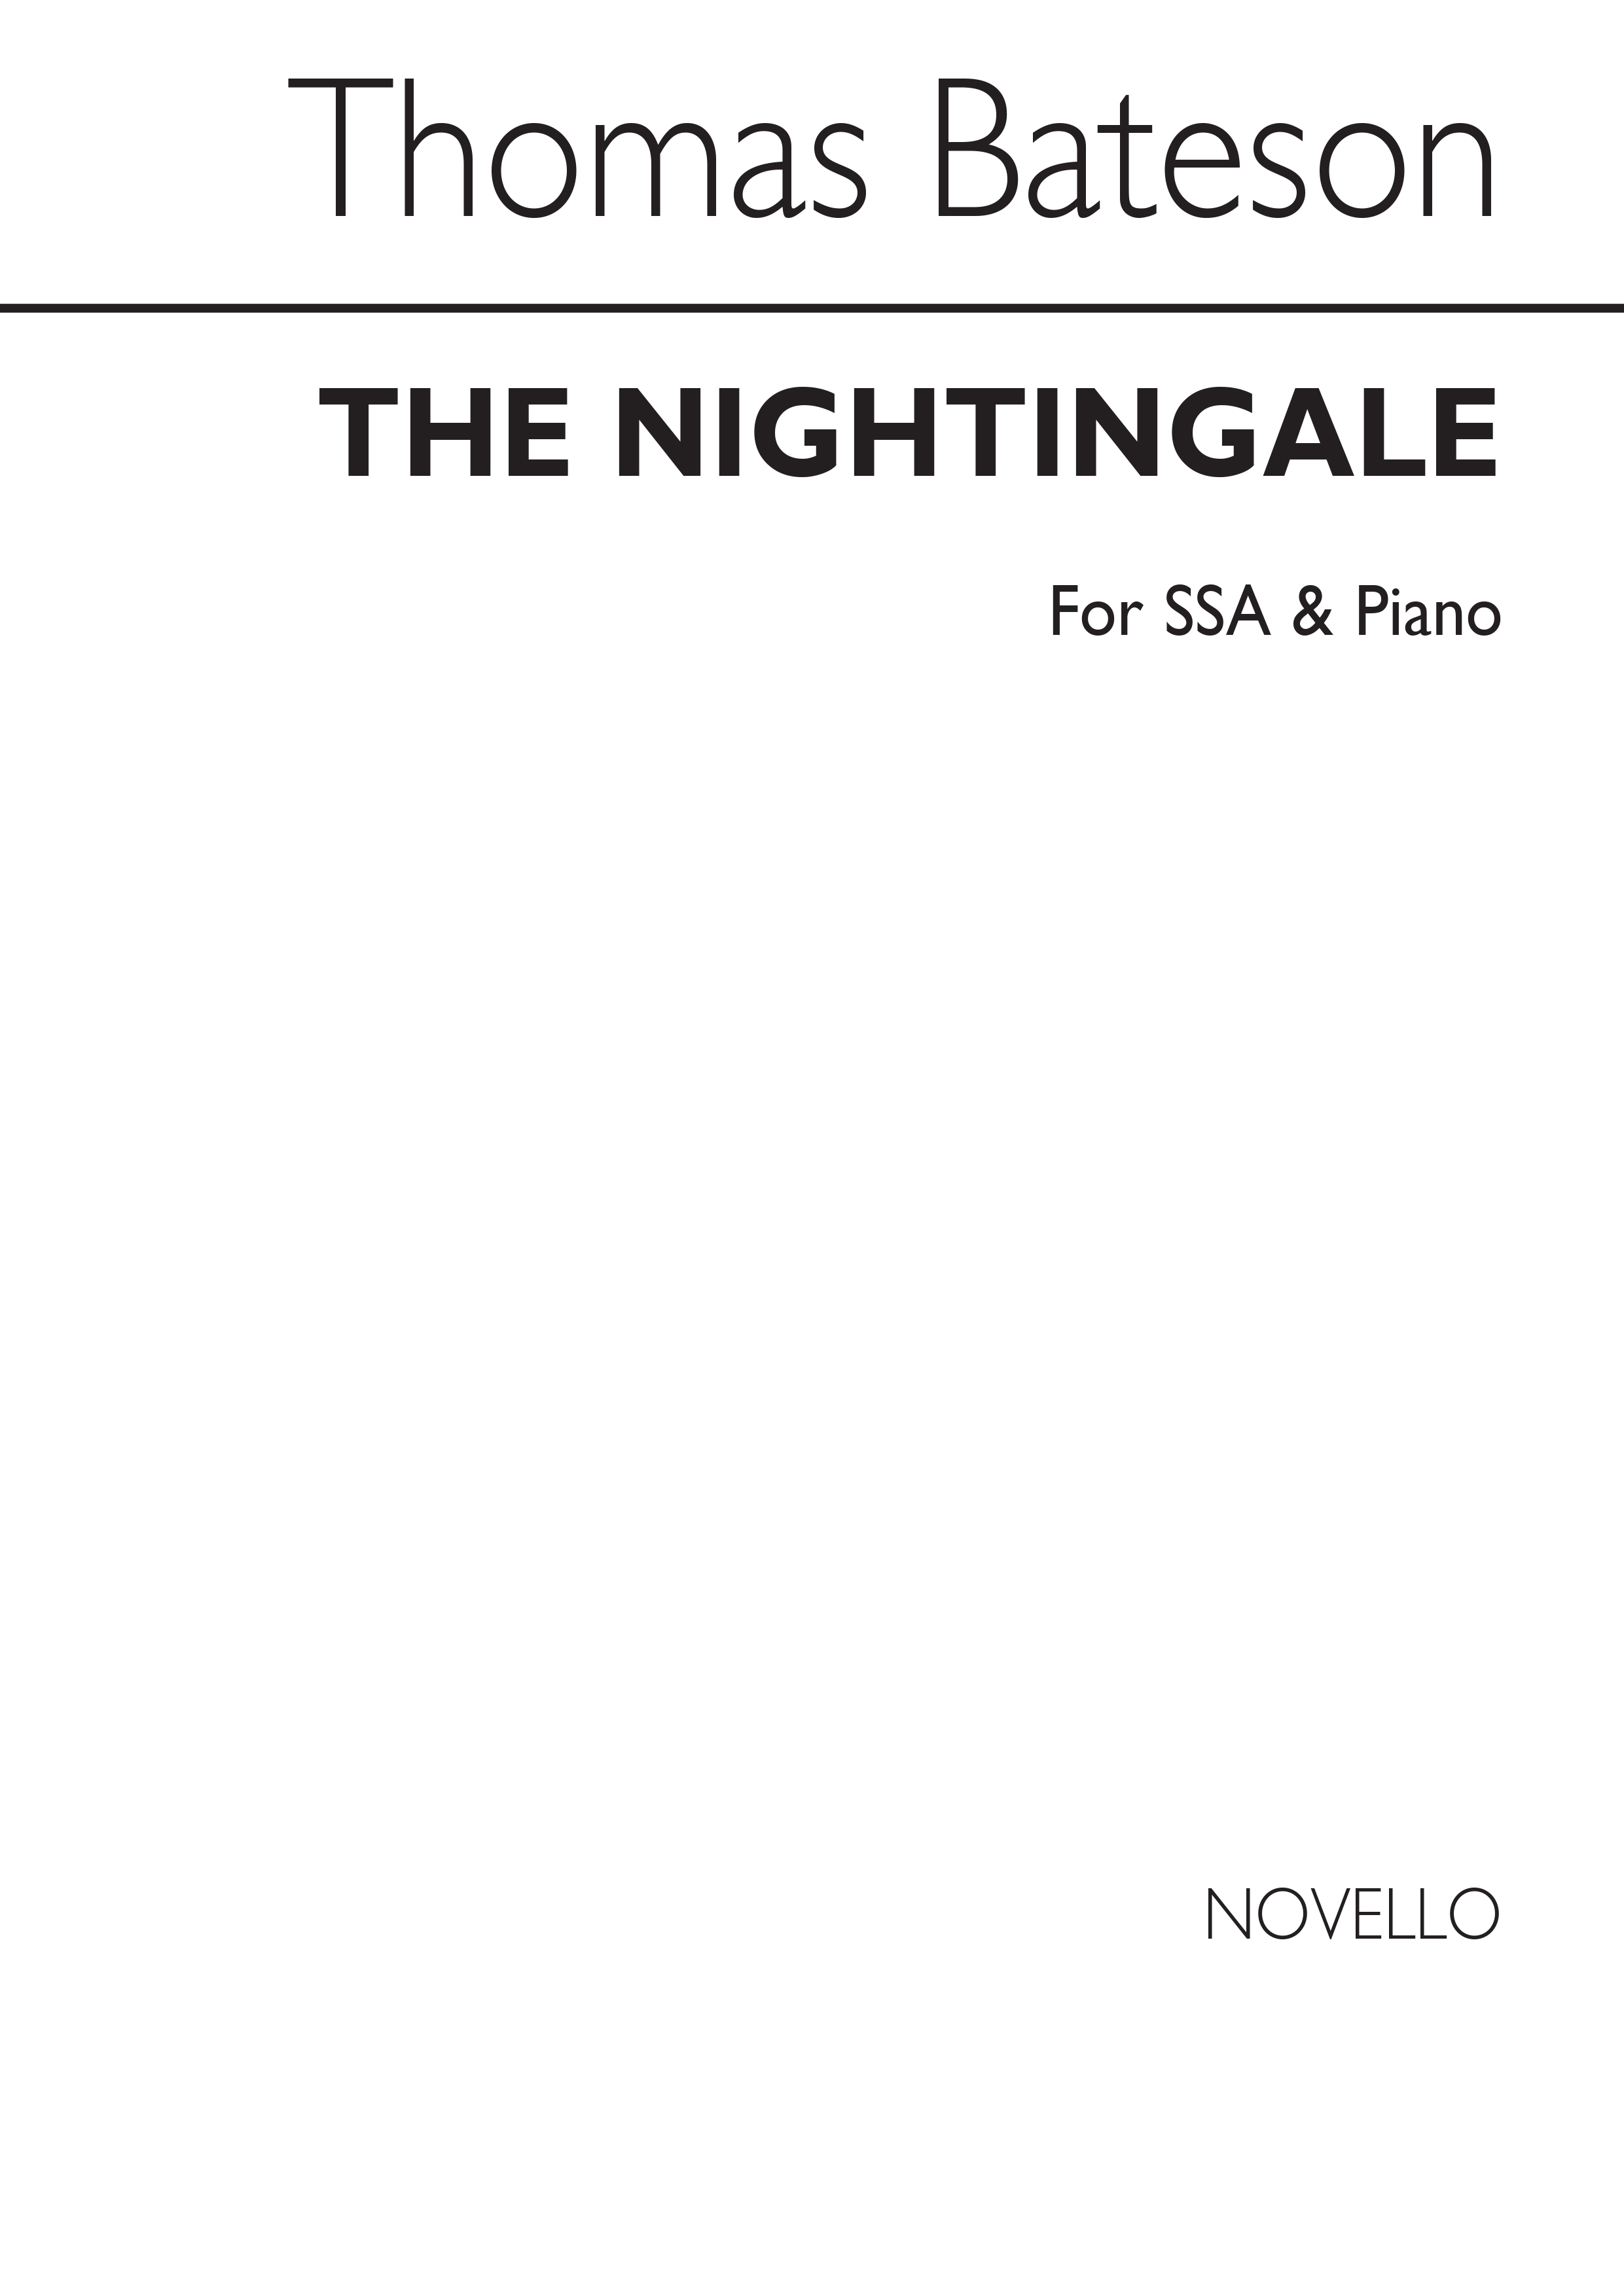 Thomas Bateson: The Nightingale Ssa/Piano